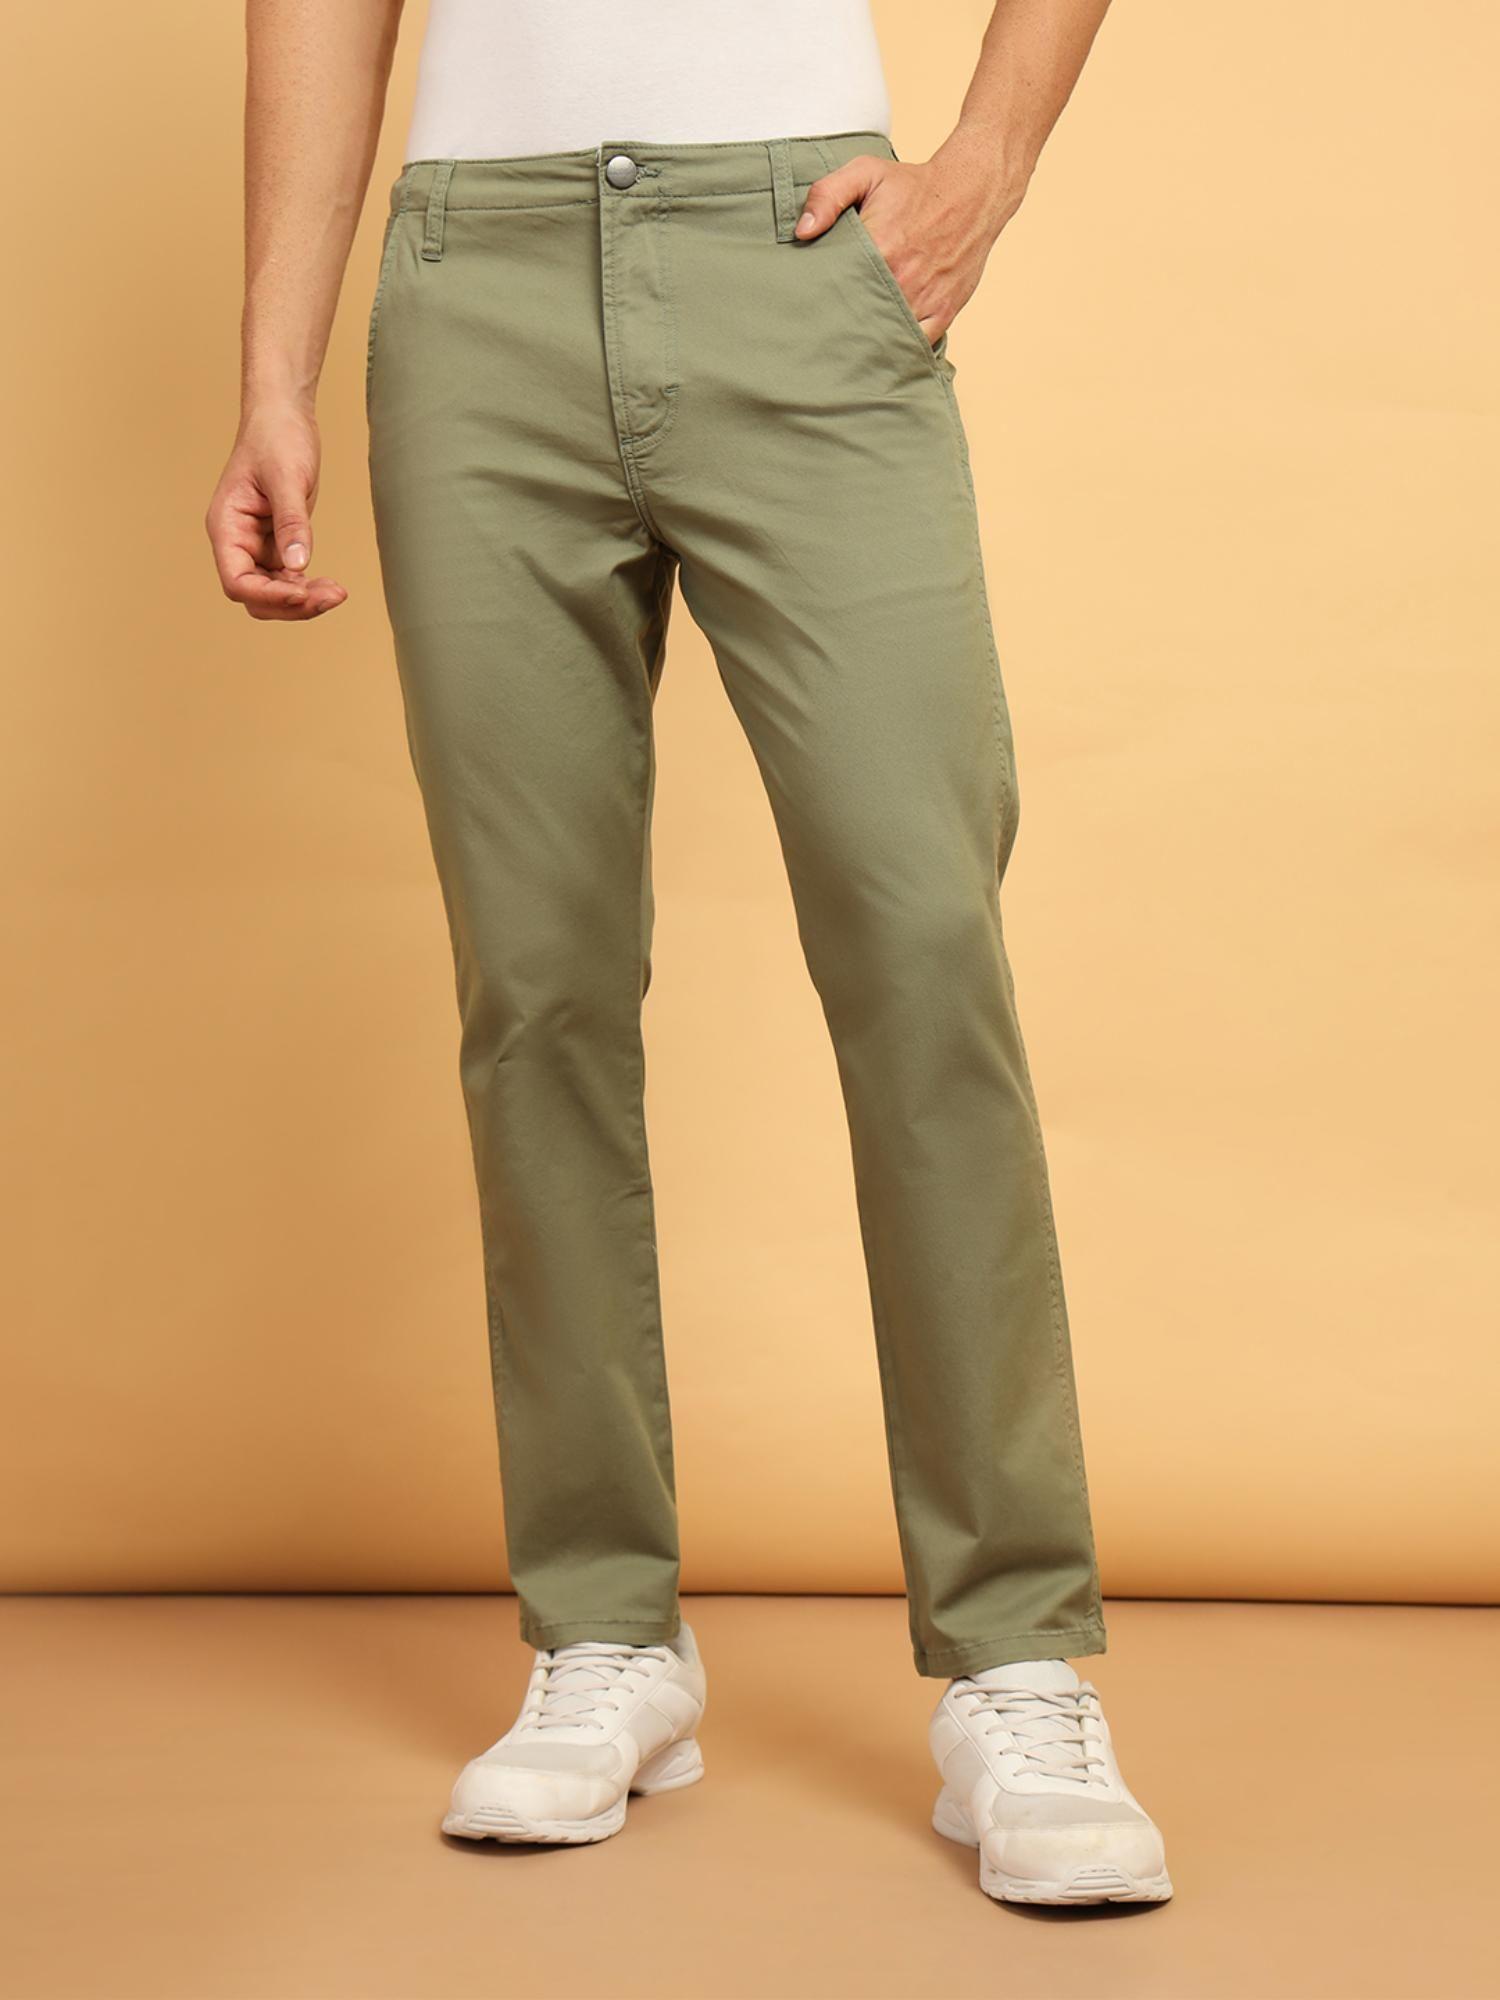 men's green chino pant